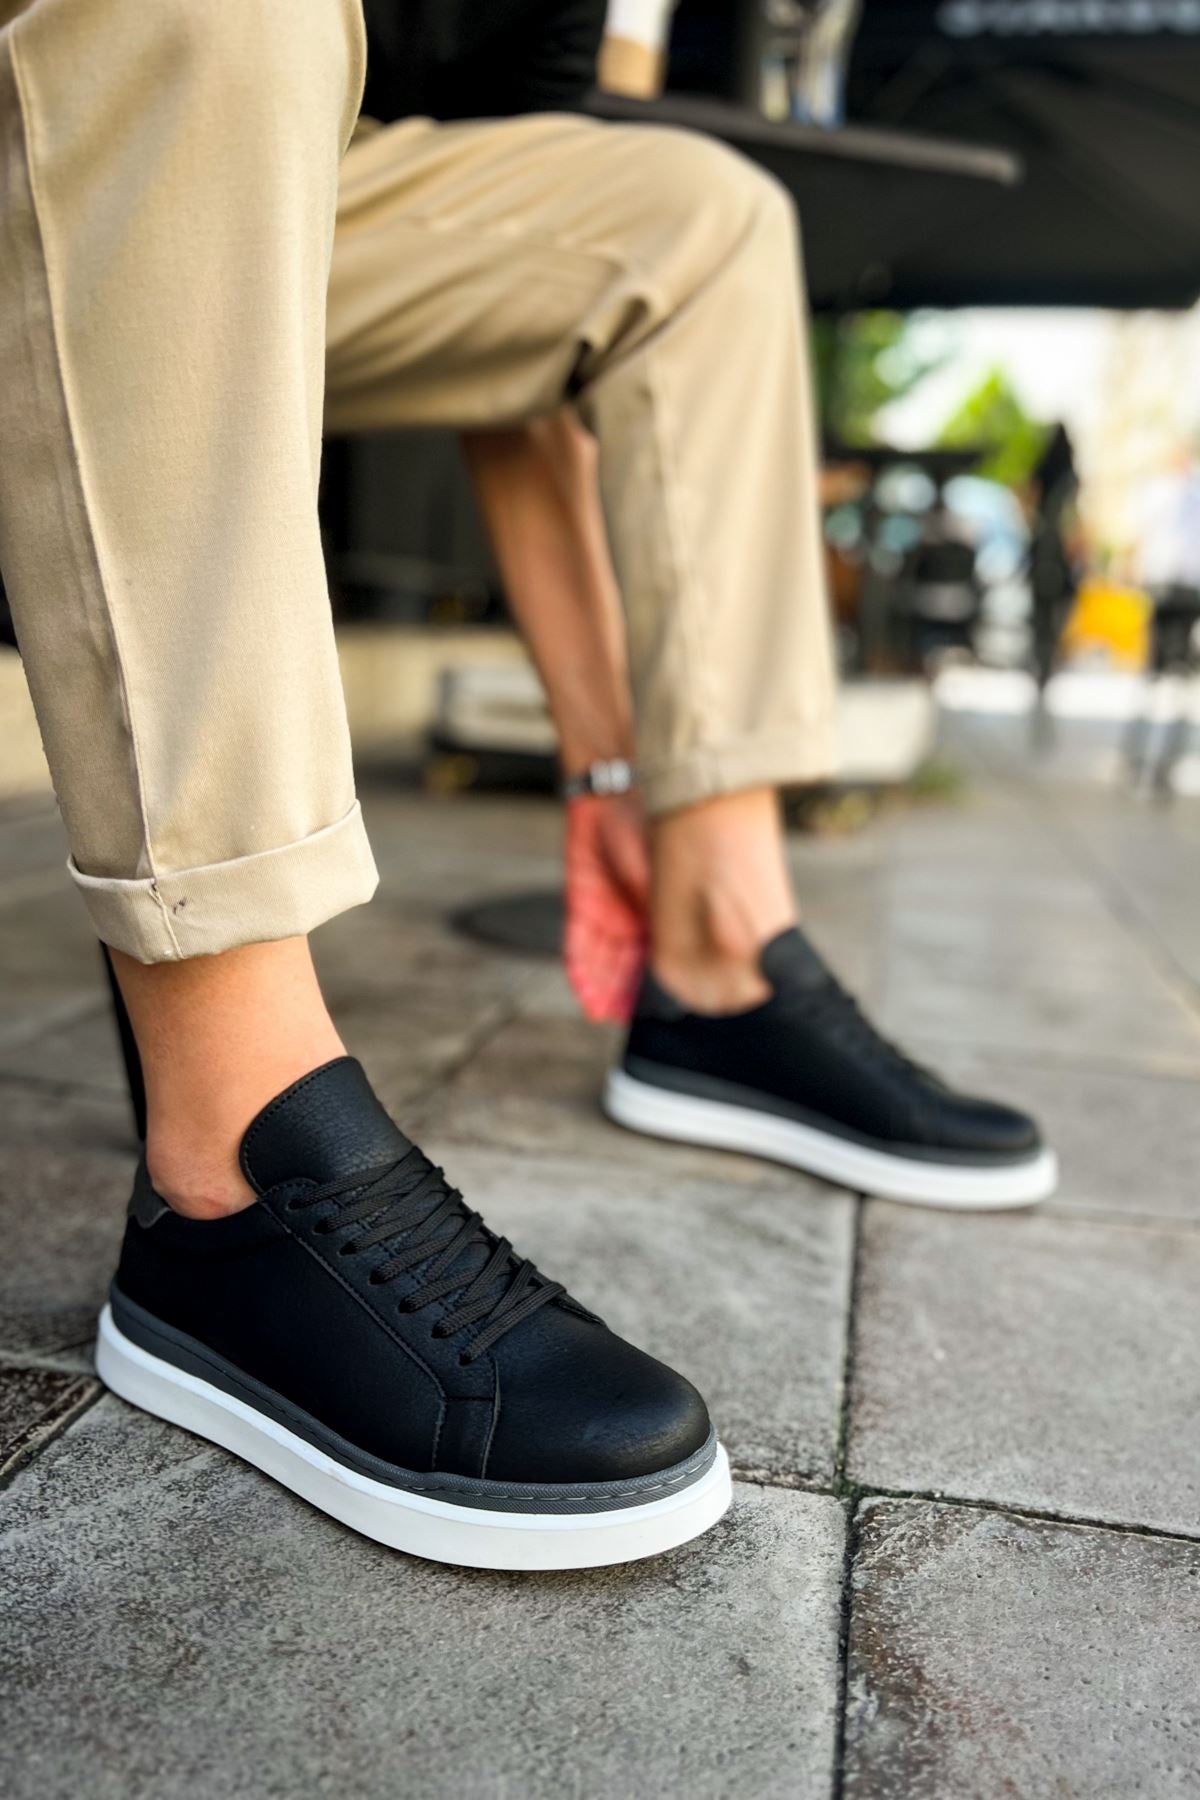 CH979 Santoni GBT Sport Men's Sneakers Shoes BLACK/ANTHRACITE - STREETMODE ™